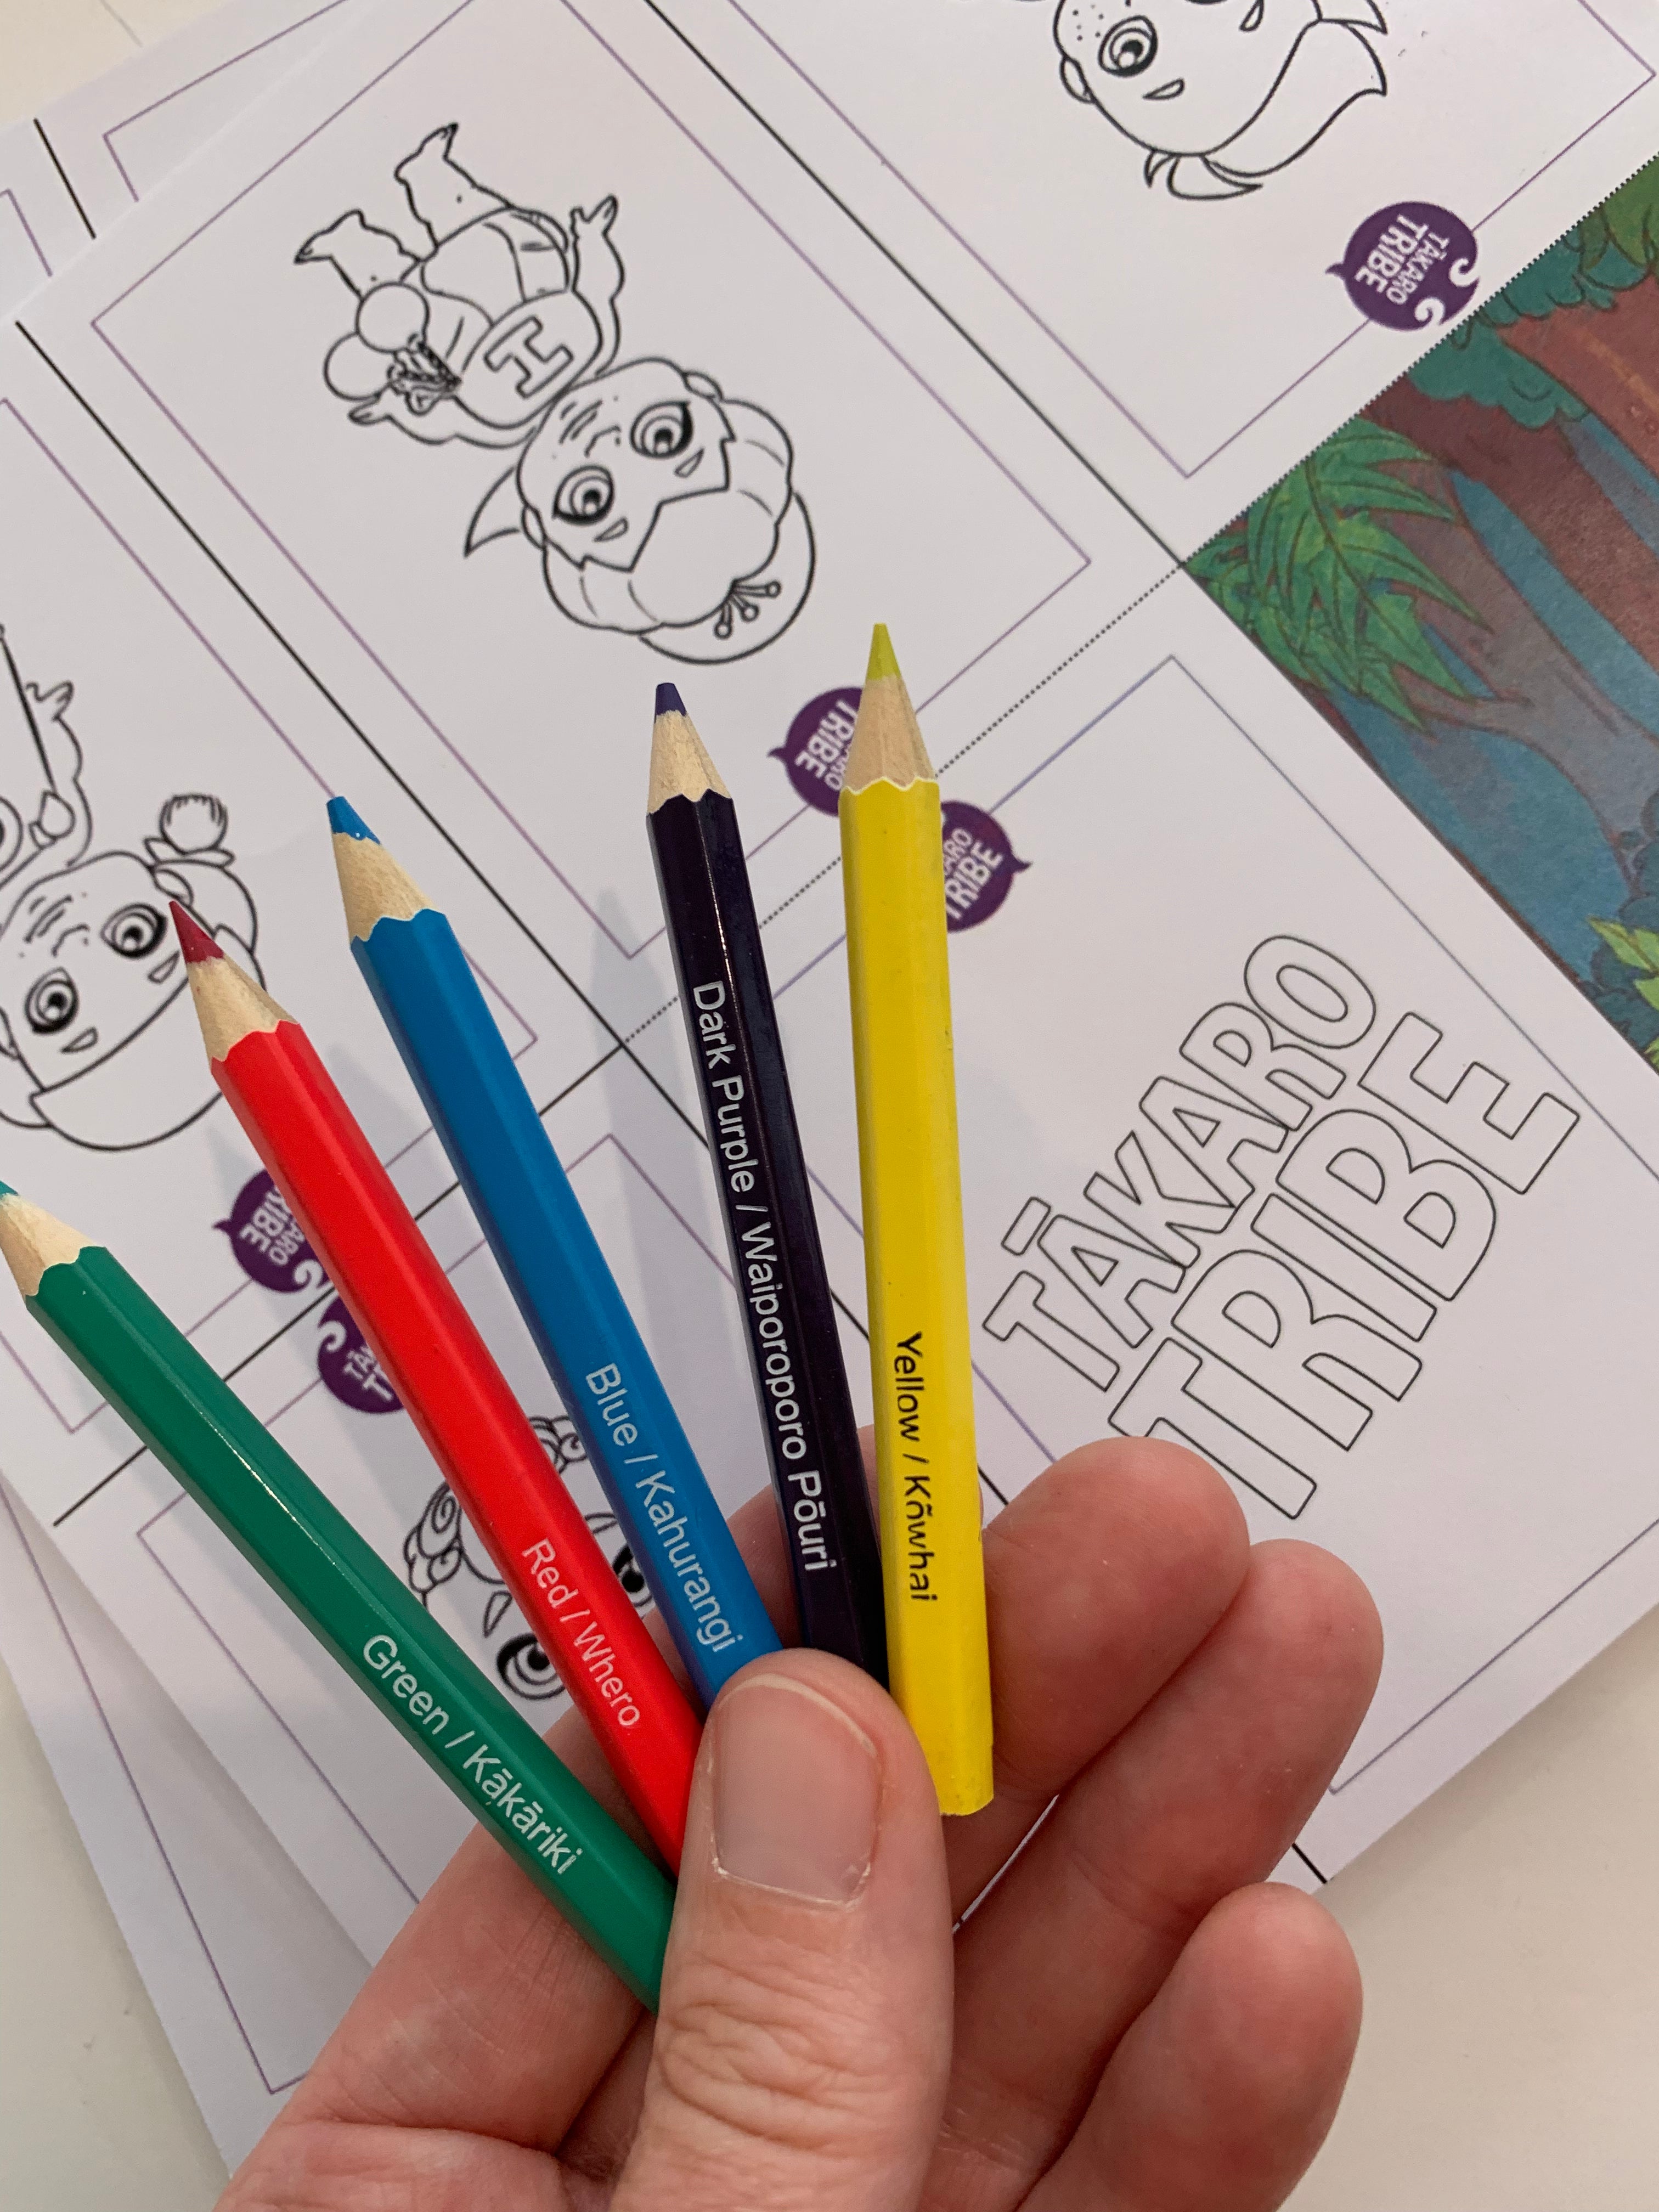 Tākaro Tribe mini colouring books party favours nz